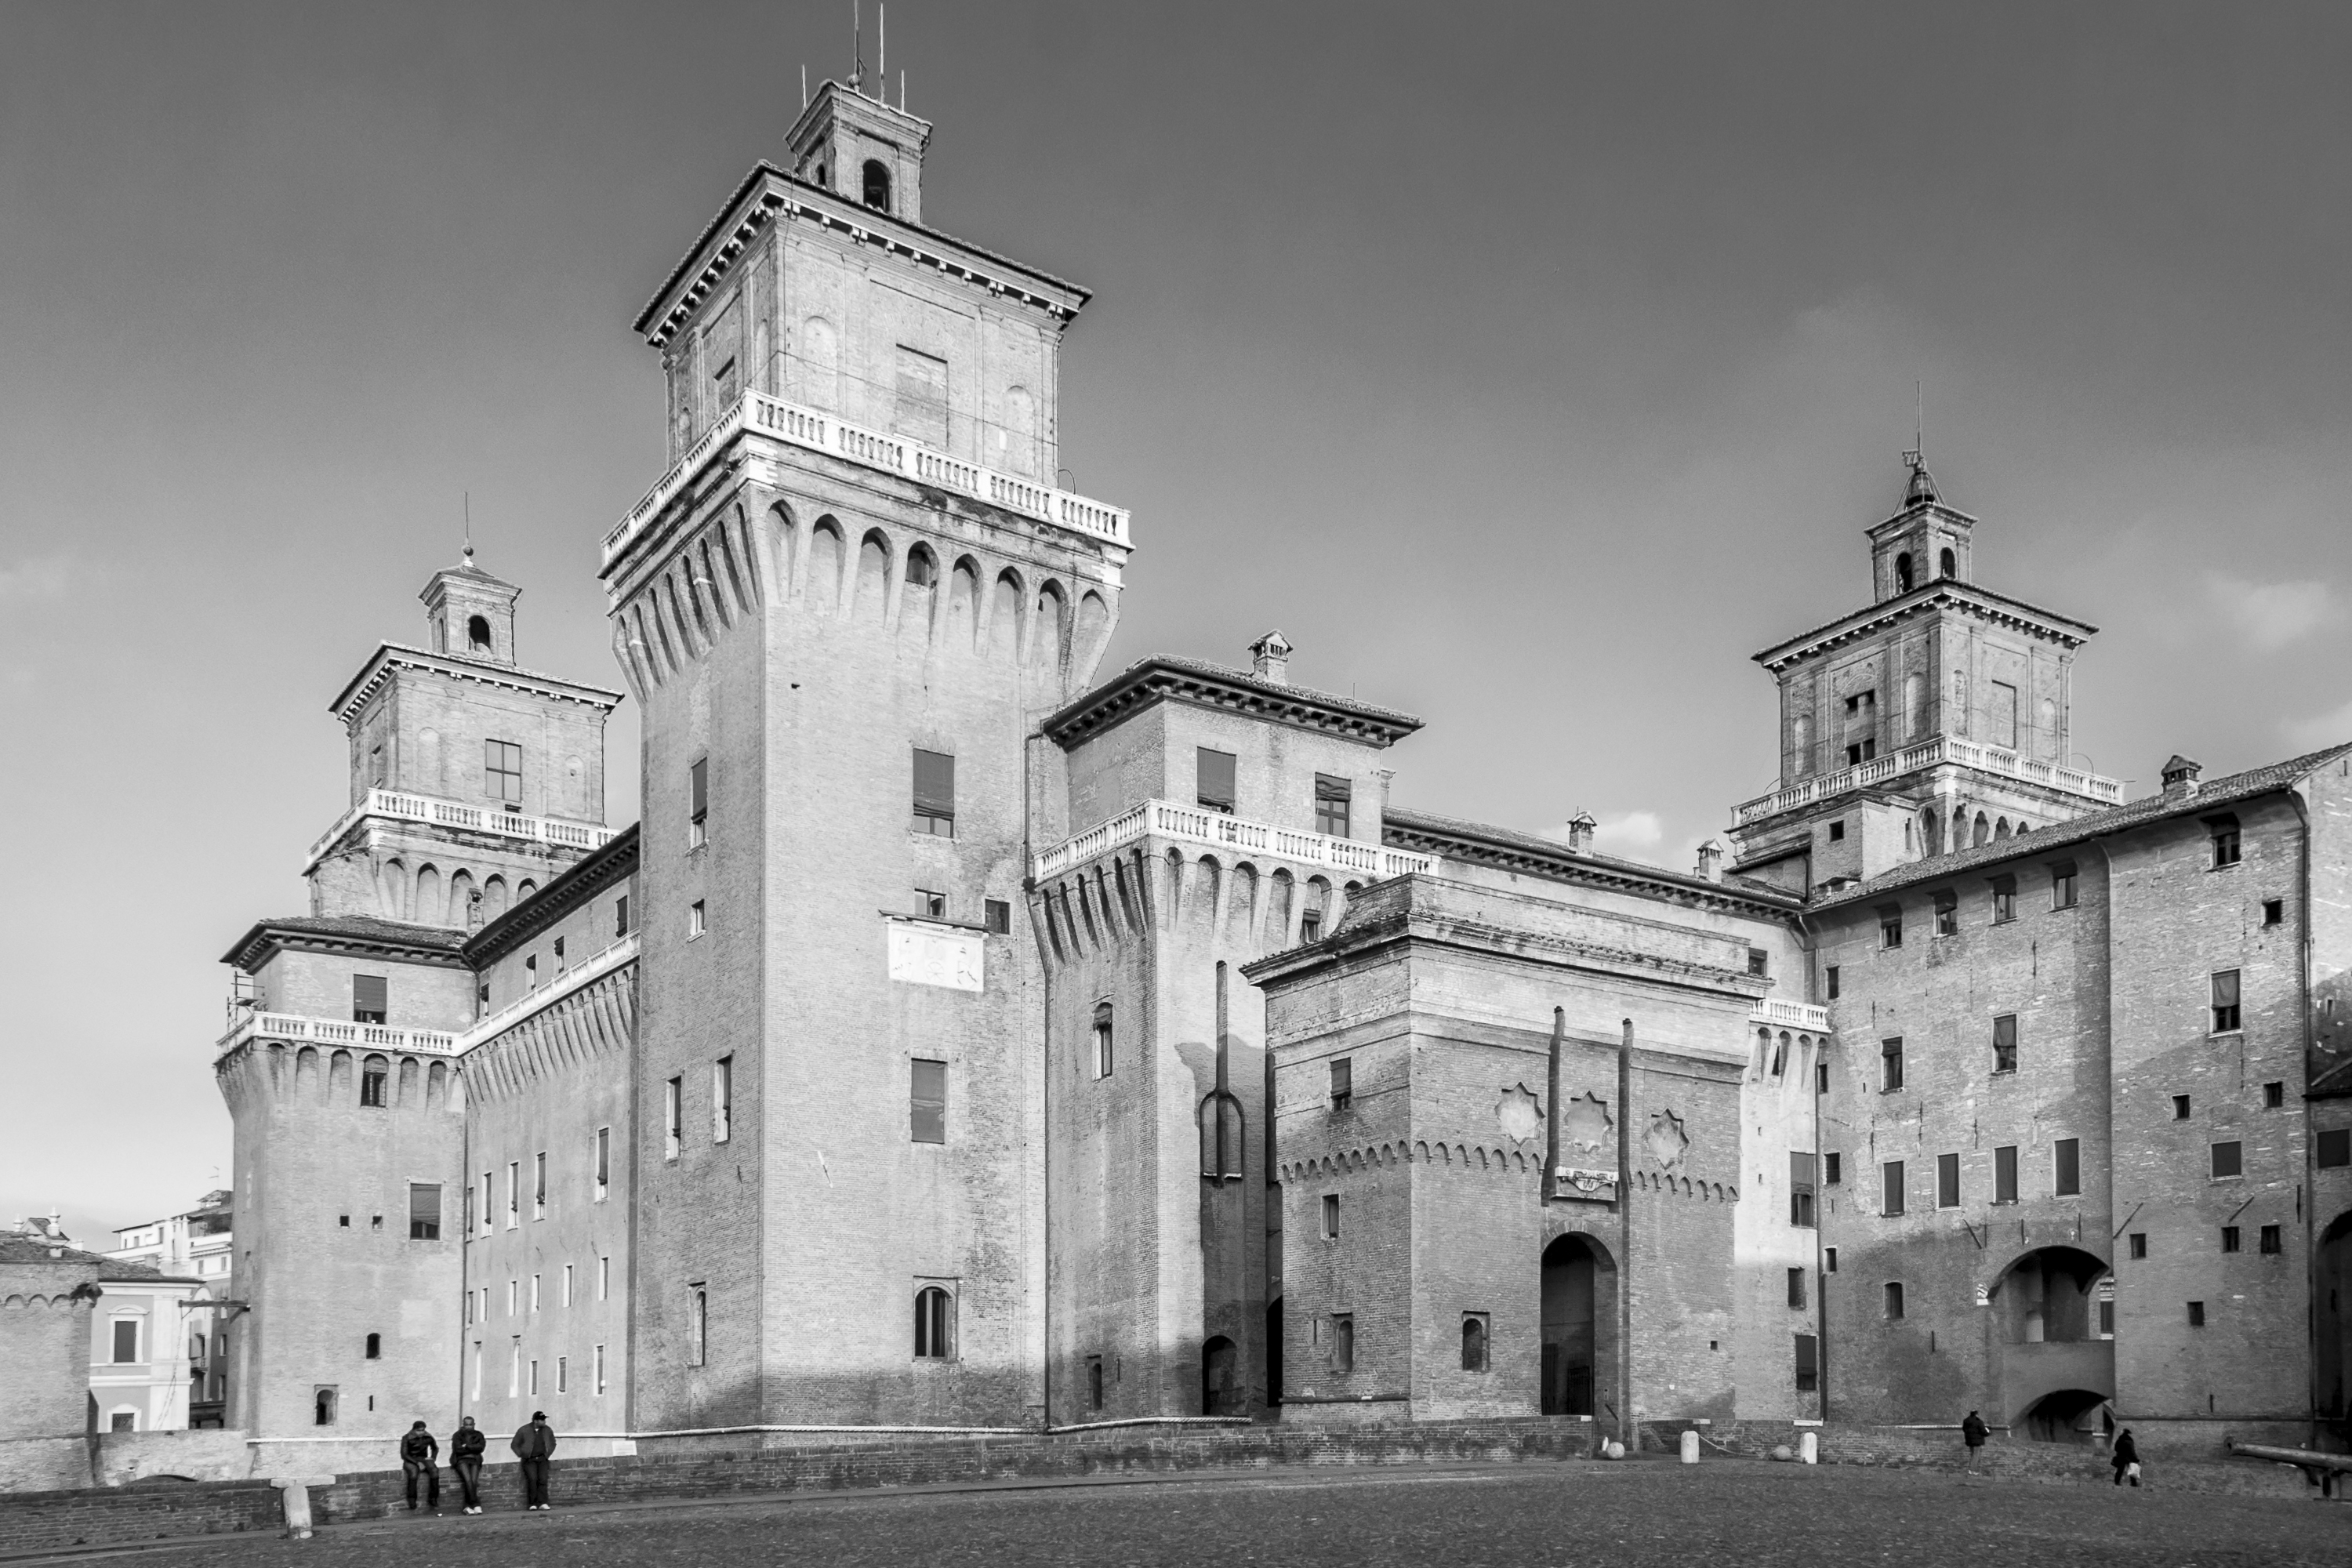 foto: https://upload.wikimedia.org/wikipedia/commons/3/31/Castello_Estense--.jpg